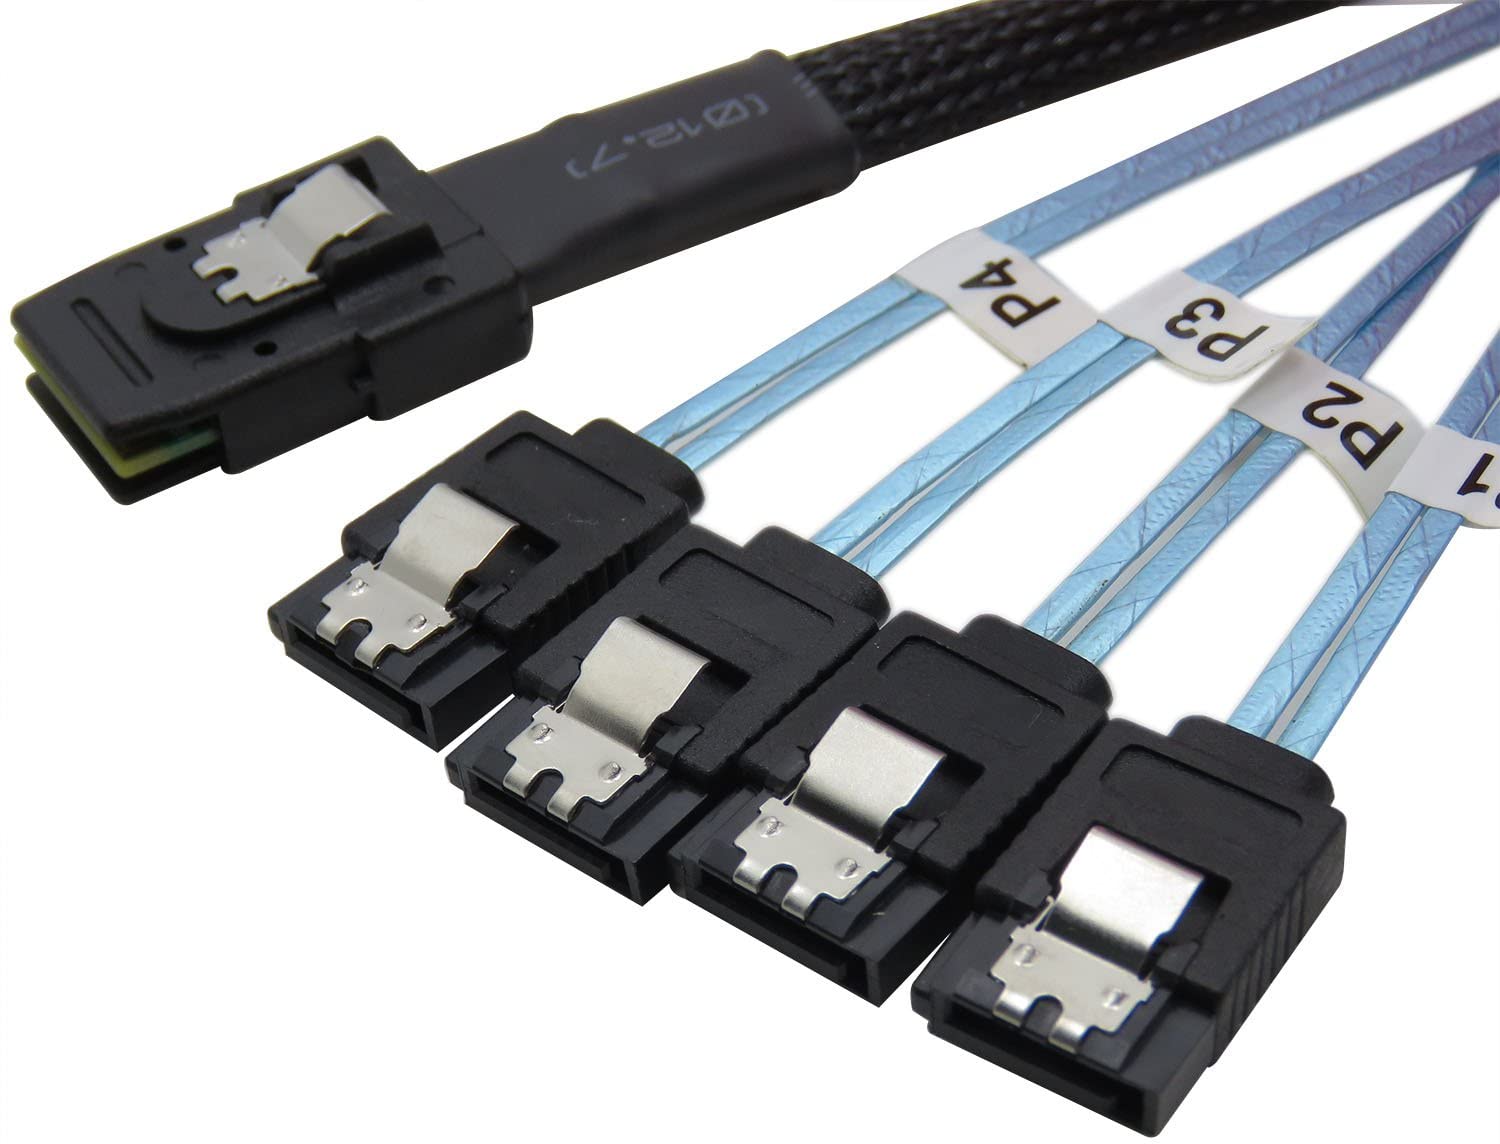 Internal Mini-SAS 36Pin SFF-8087 to 4 x SATA 7Pin Data Cable